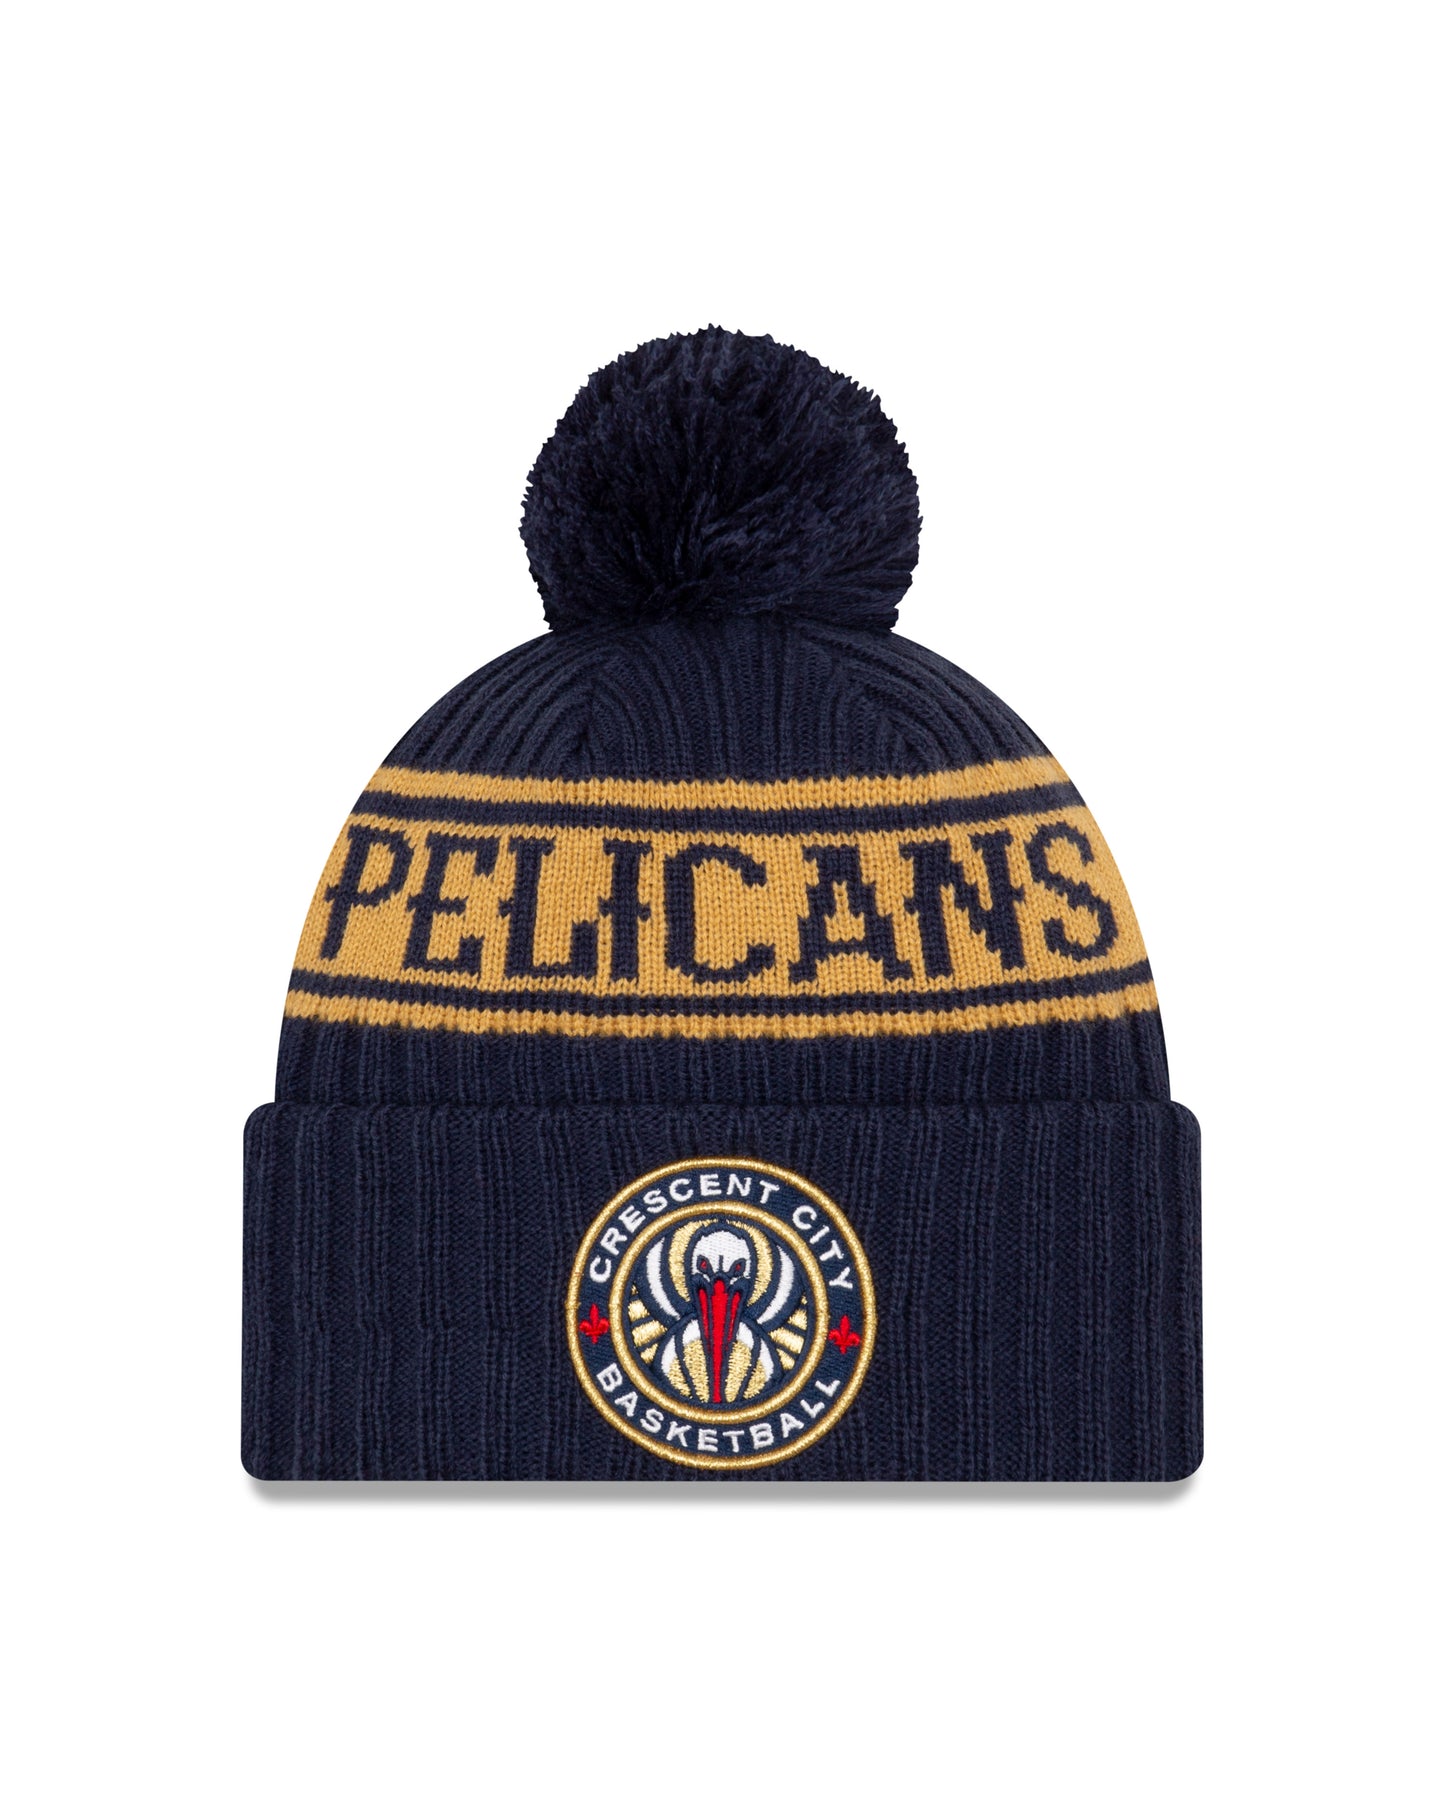 New Orleans Pelicans New Era Draft Knit Hat